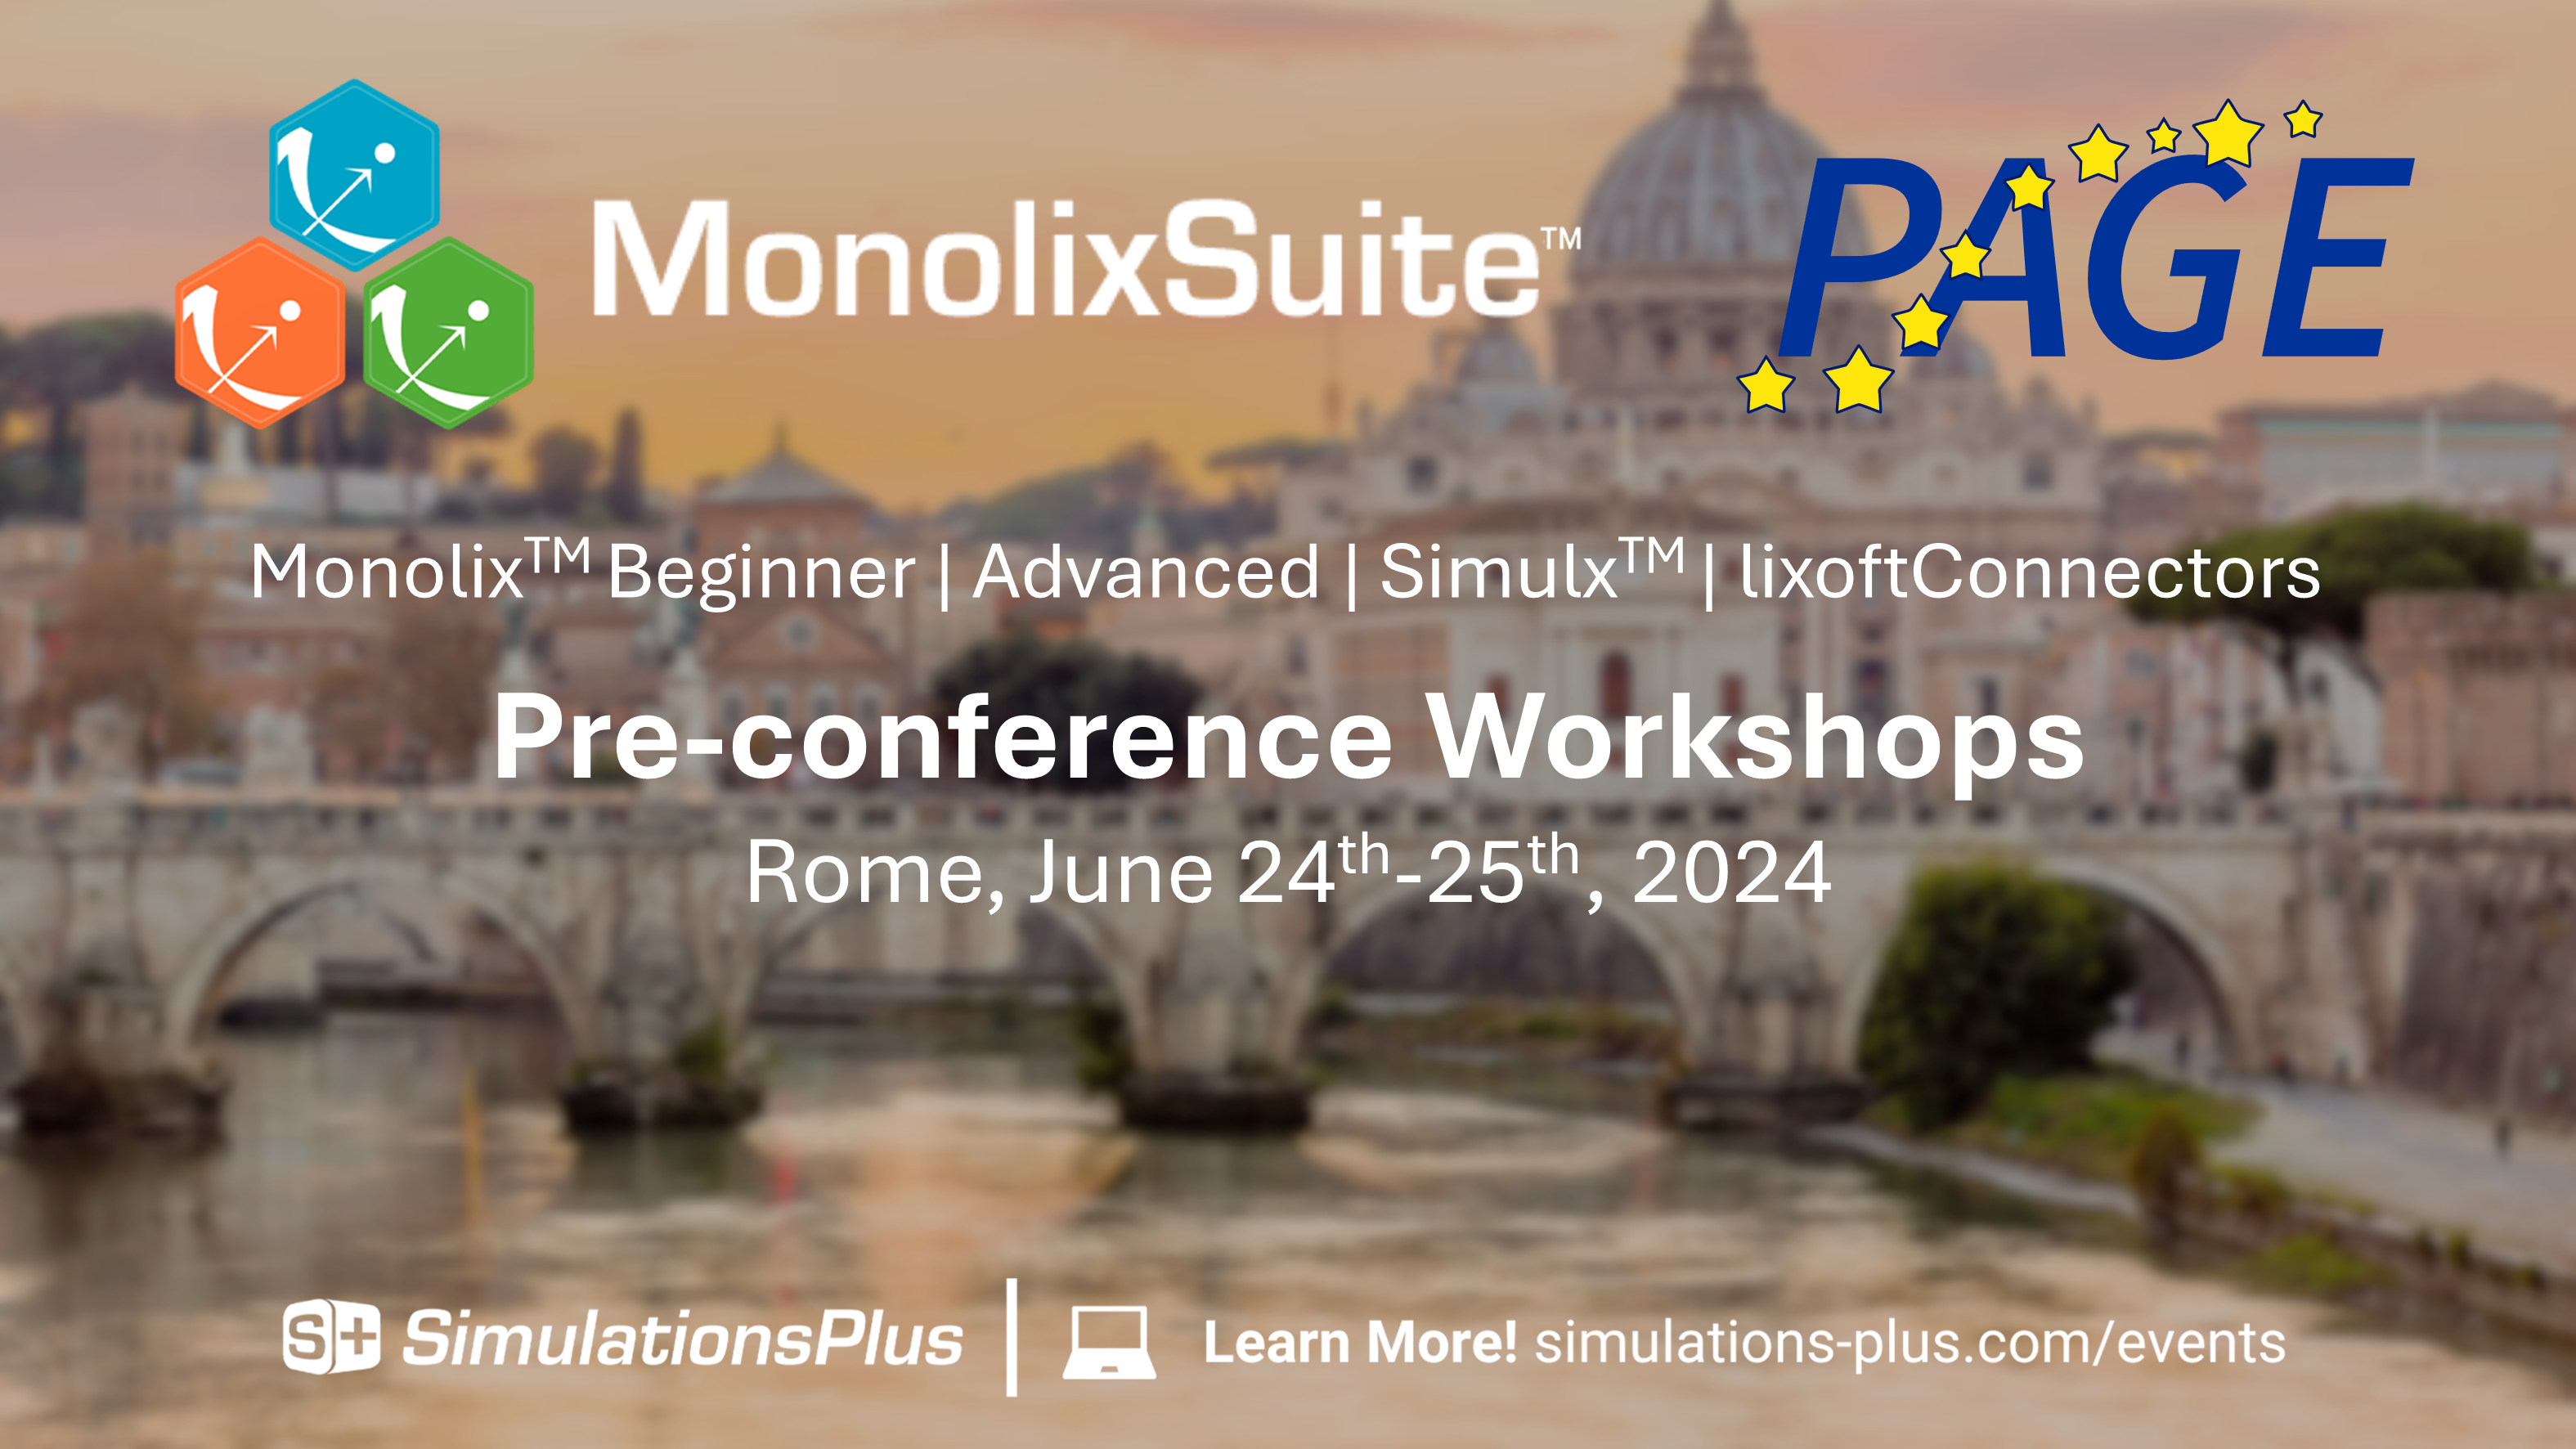 PAGE Conference Satellite Workshops – MonolixSuite